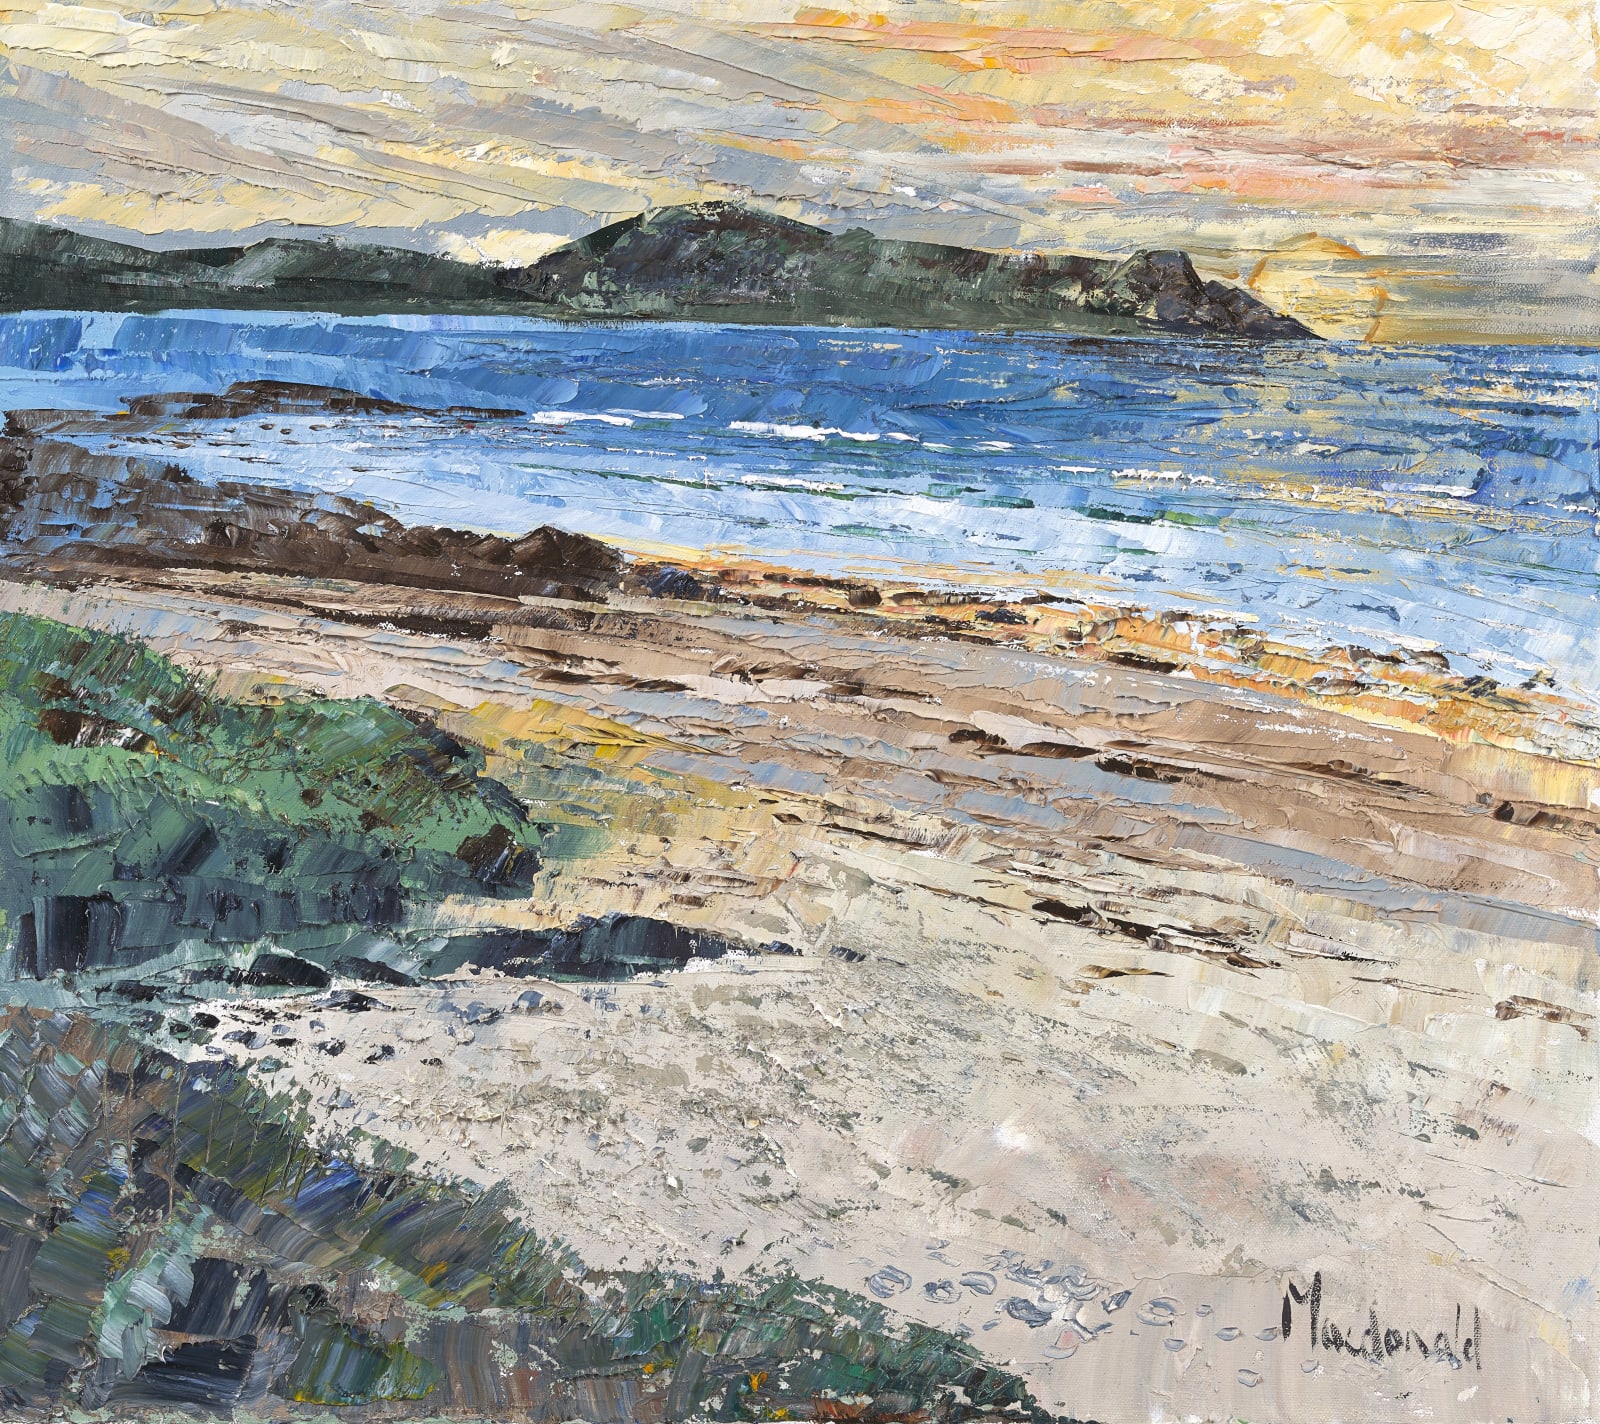 Frances Macdonald, Sun Setting over the Kame of Hoy, Orkney